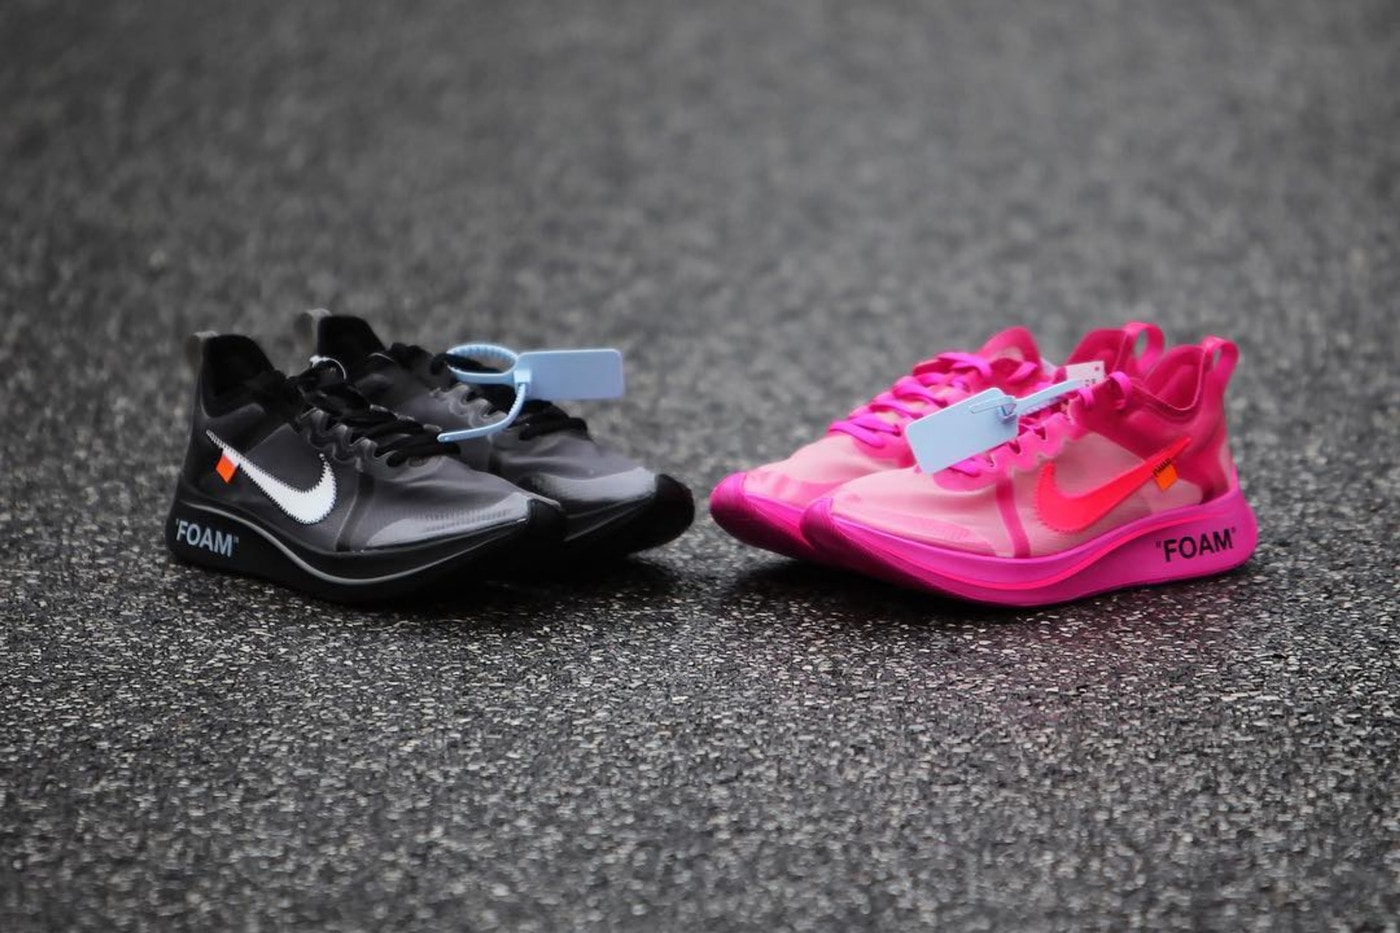 Off-White x Nike Zoom Fly SP Release Date Pink Black November 28 Drop Date Rumor Virgil Abloh